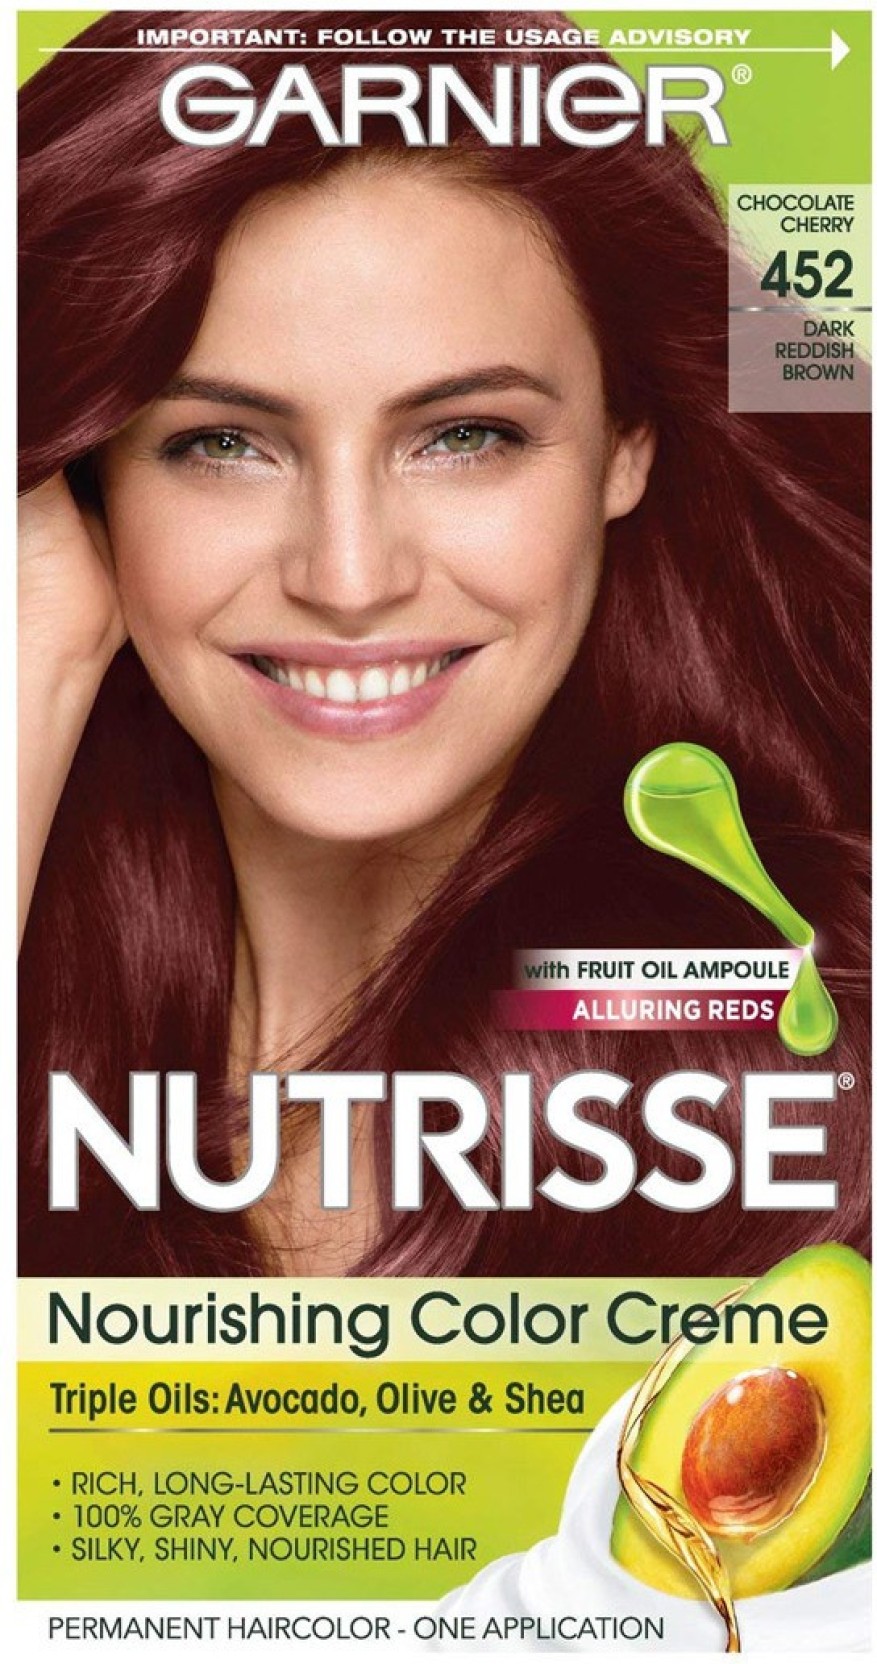 Garnier Nutrisse Nourishing Hair Color Creme 452 Dark